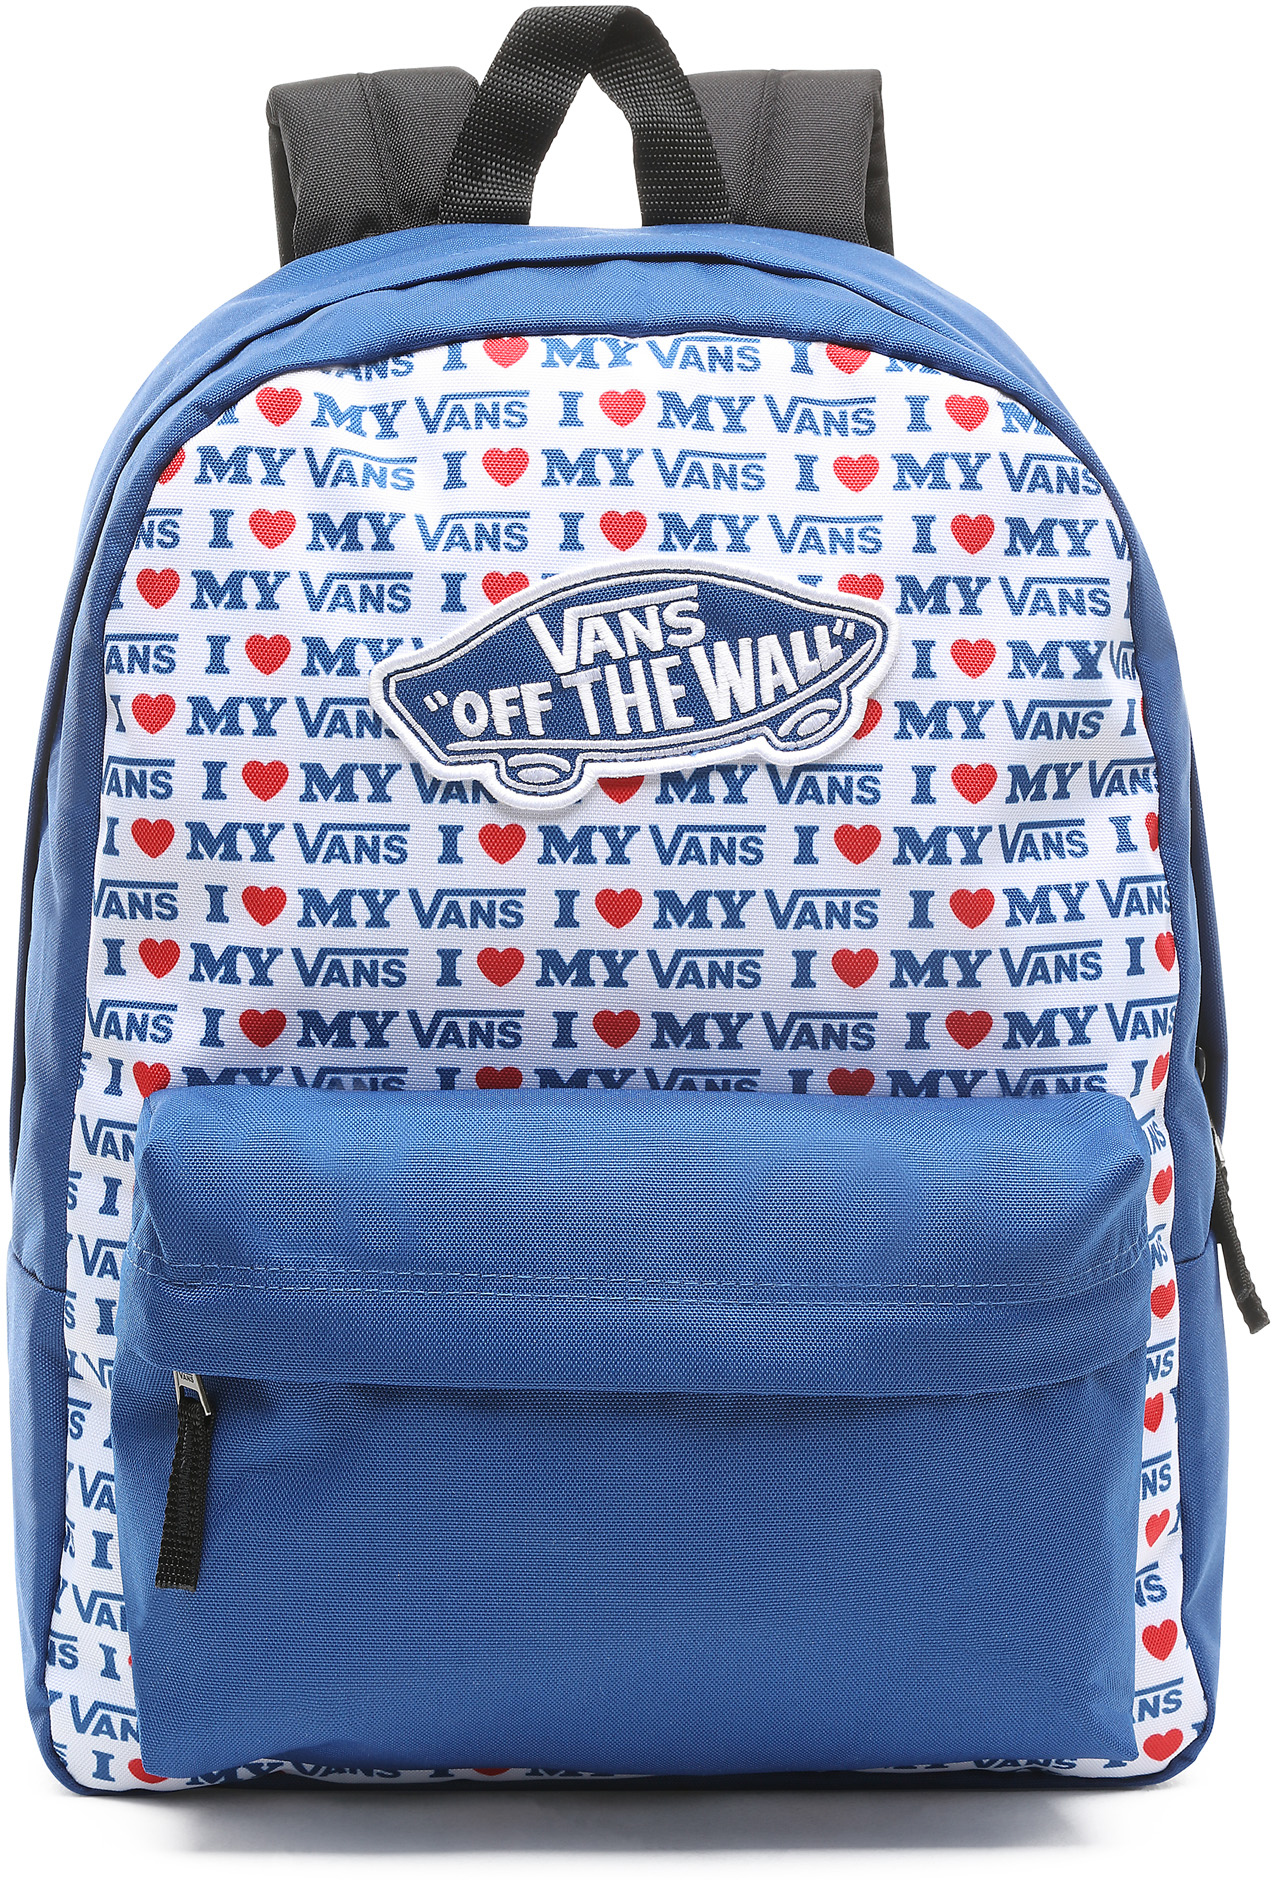 Рюкзак женский Vans Wm Realm Backpack, VA3UI6UWF, синий, белый, 22 л